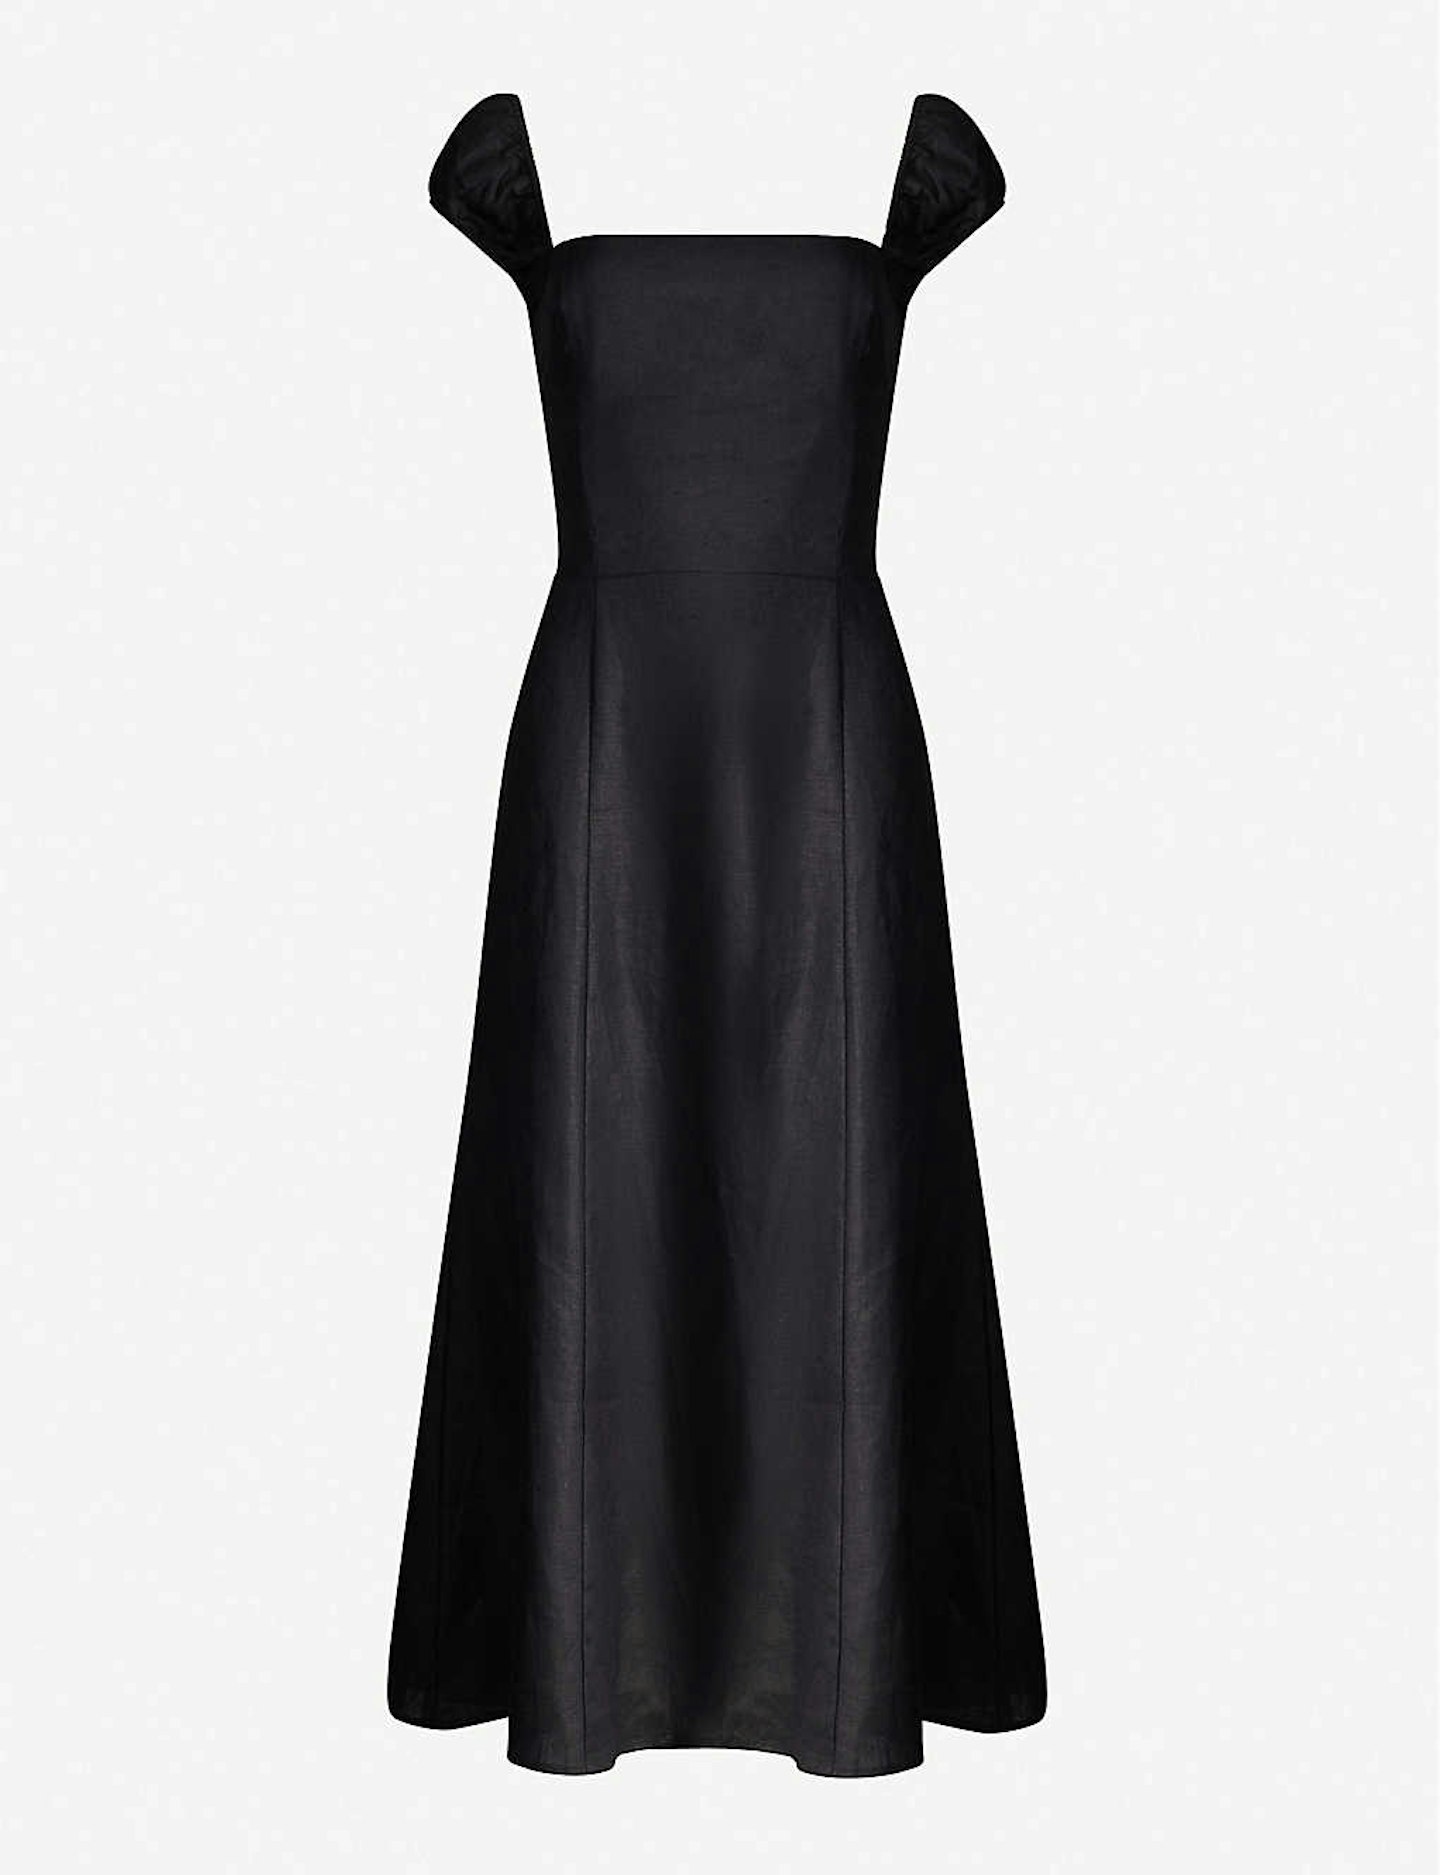 Reformation, Puff Sleeve Black Midi Dress, £255